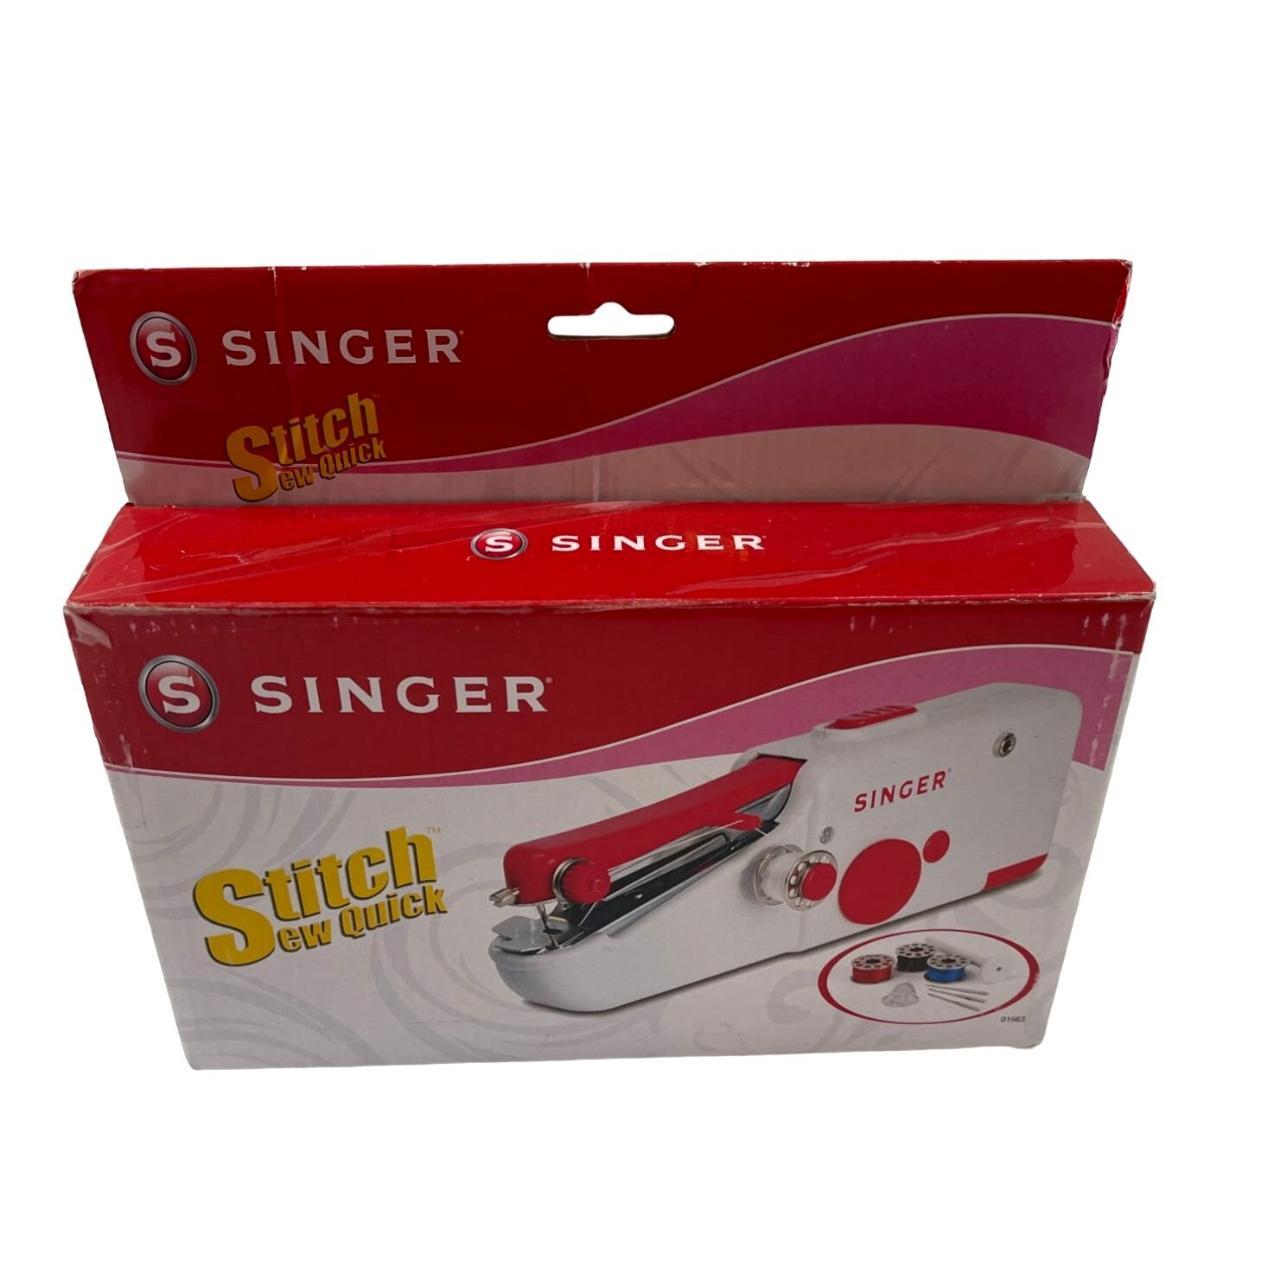 SINGER Stitch Sew Quick Portable Mending Machine